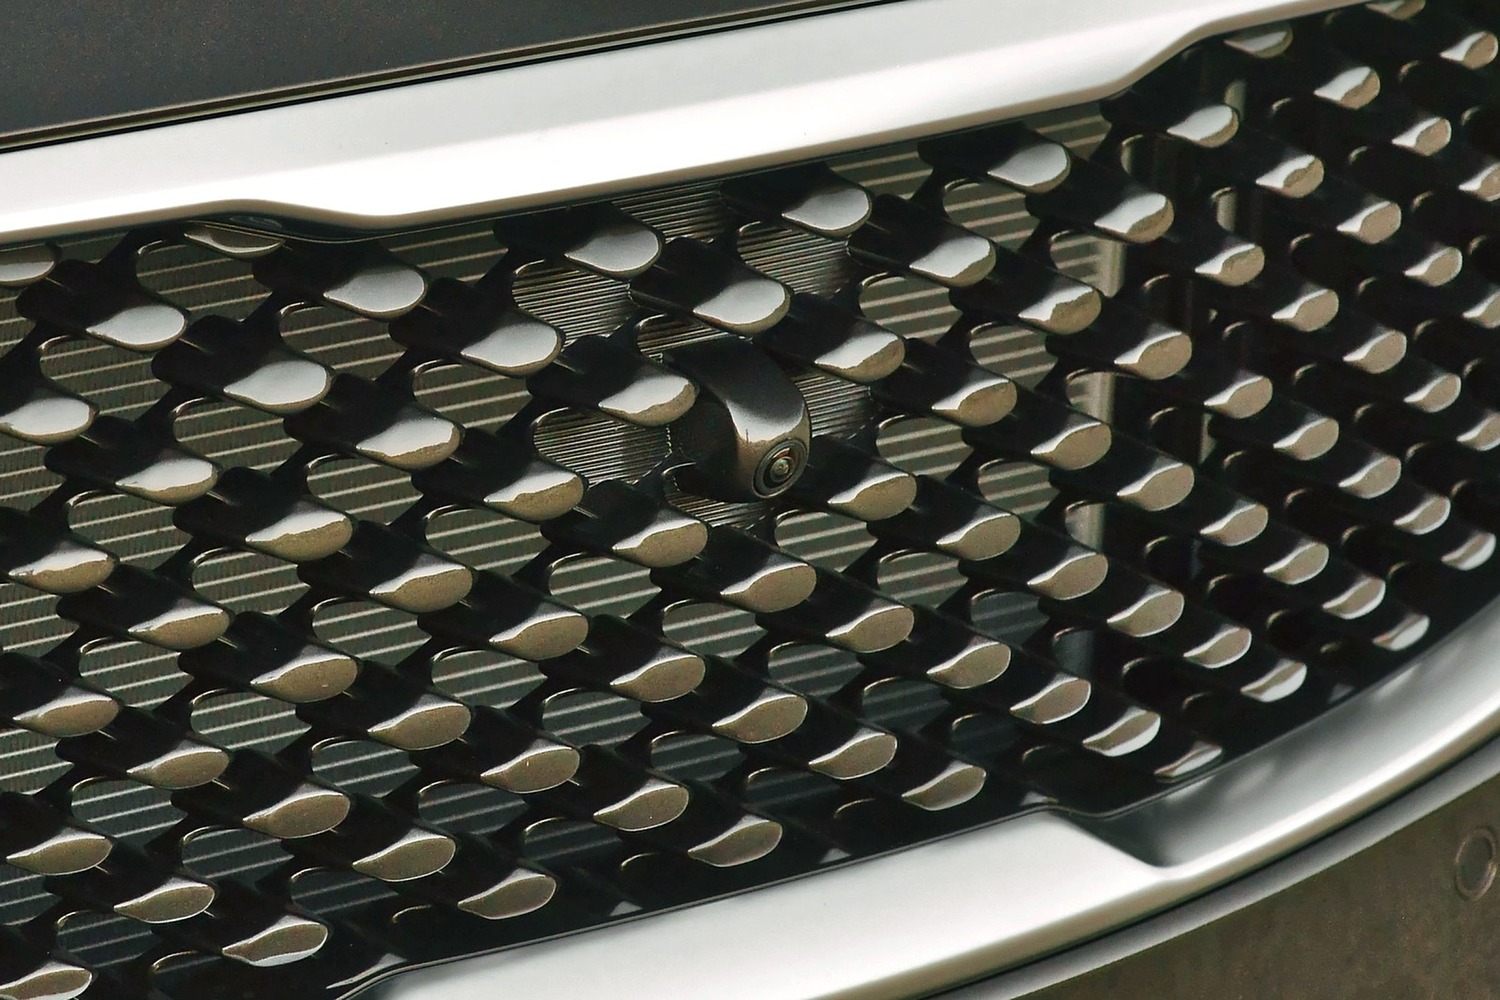 Kia Sedona SX Limited Passenger Minivan Exterior Detail (2016 model year shown)